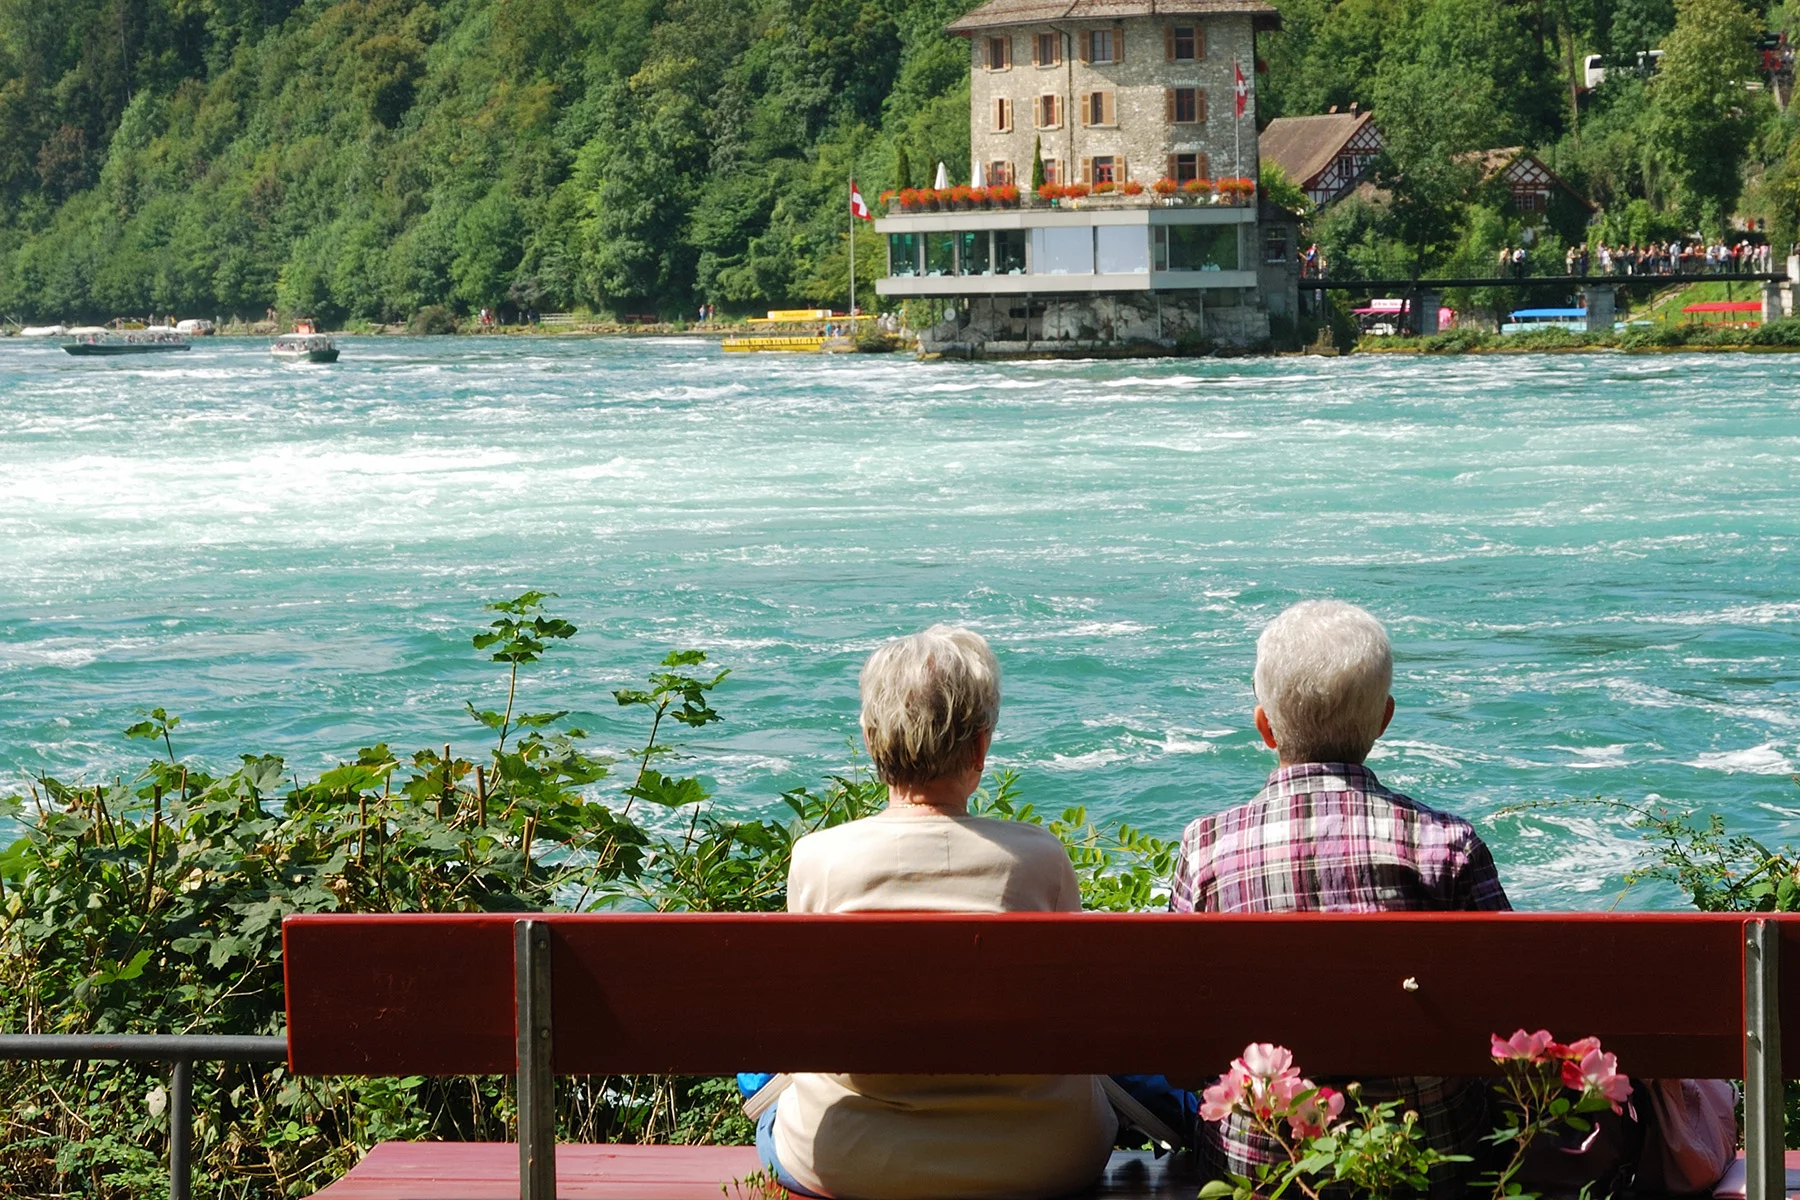 An elderly couple in Switzerland